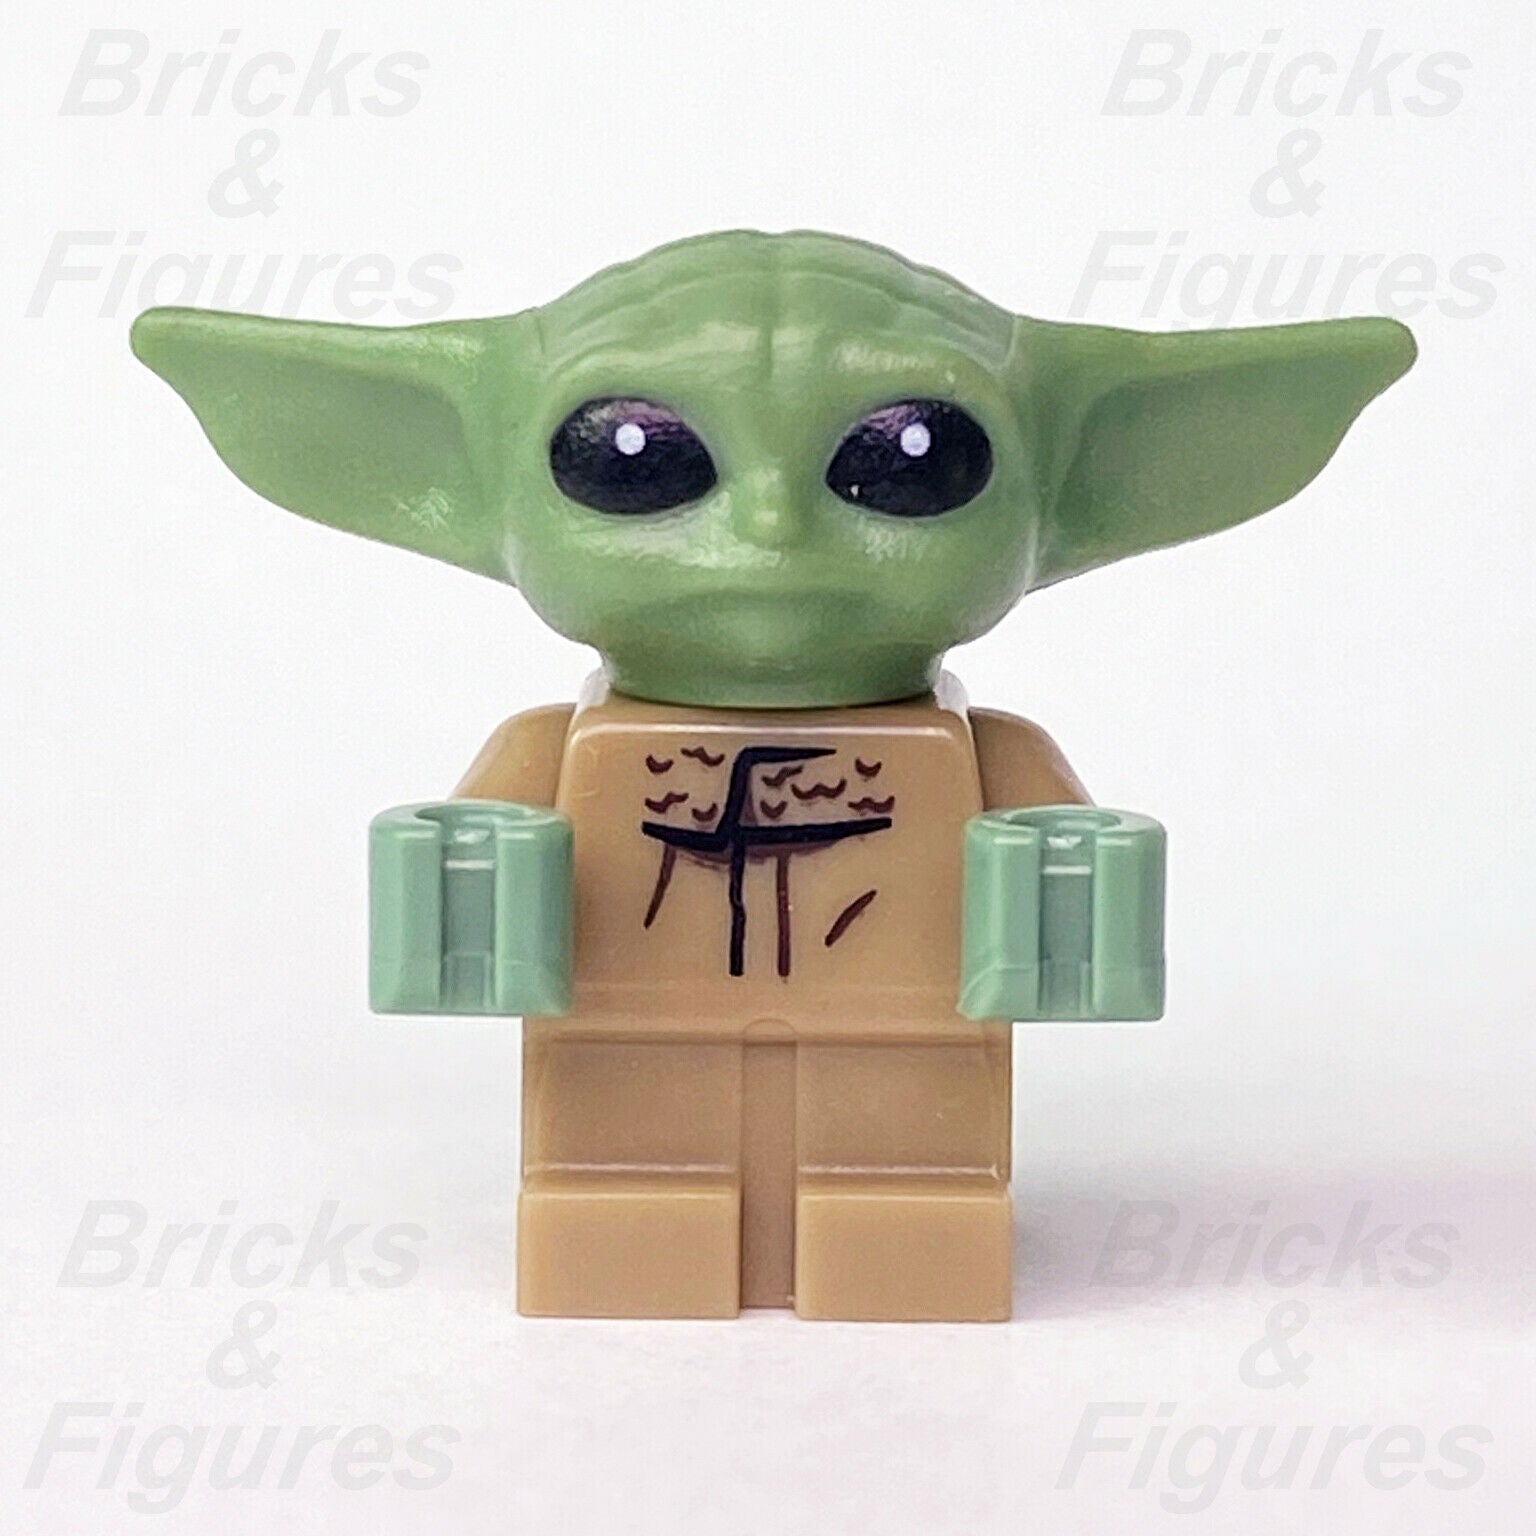 LEGO Star Wars Grogu (Baby Yoda) Minifigure with Red Christmas